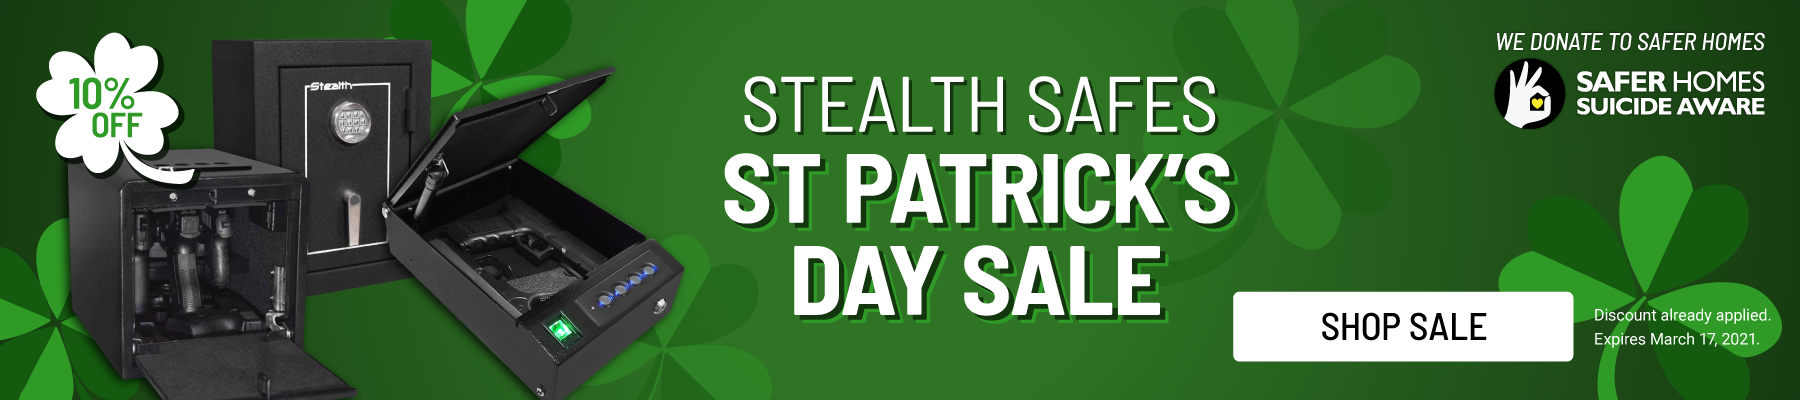 Stealth Safes St. Patrick's Day Sale - 10% Off